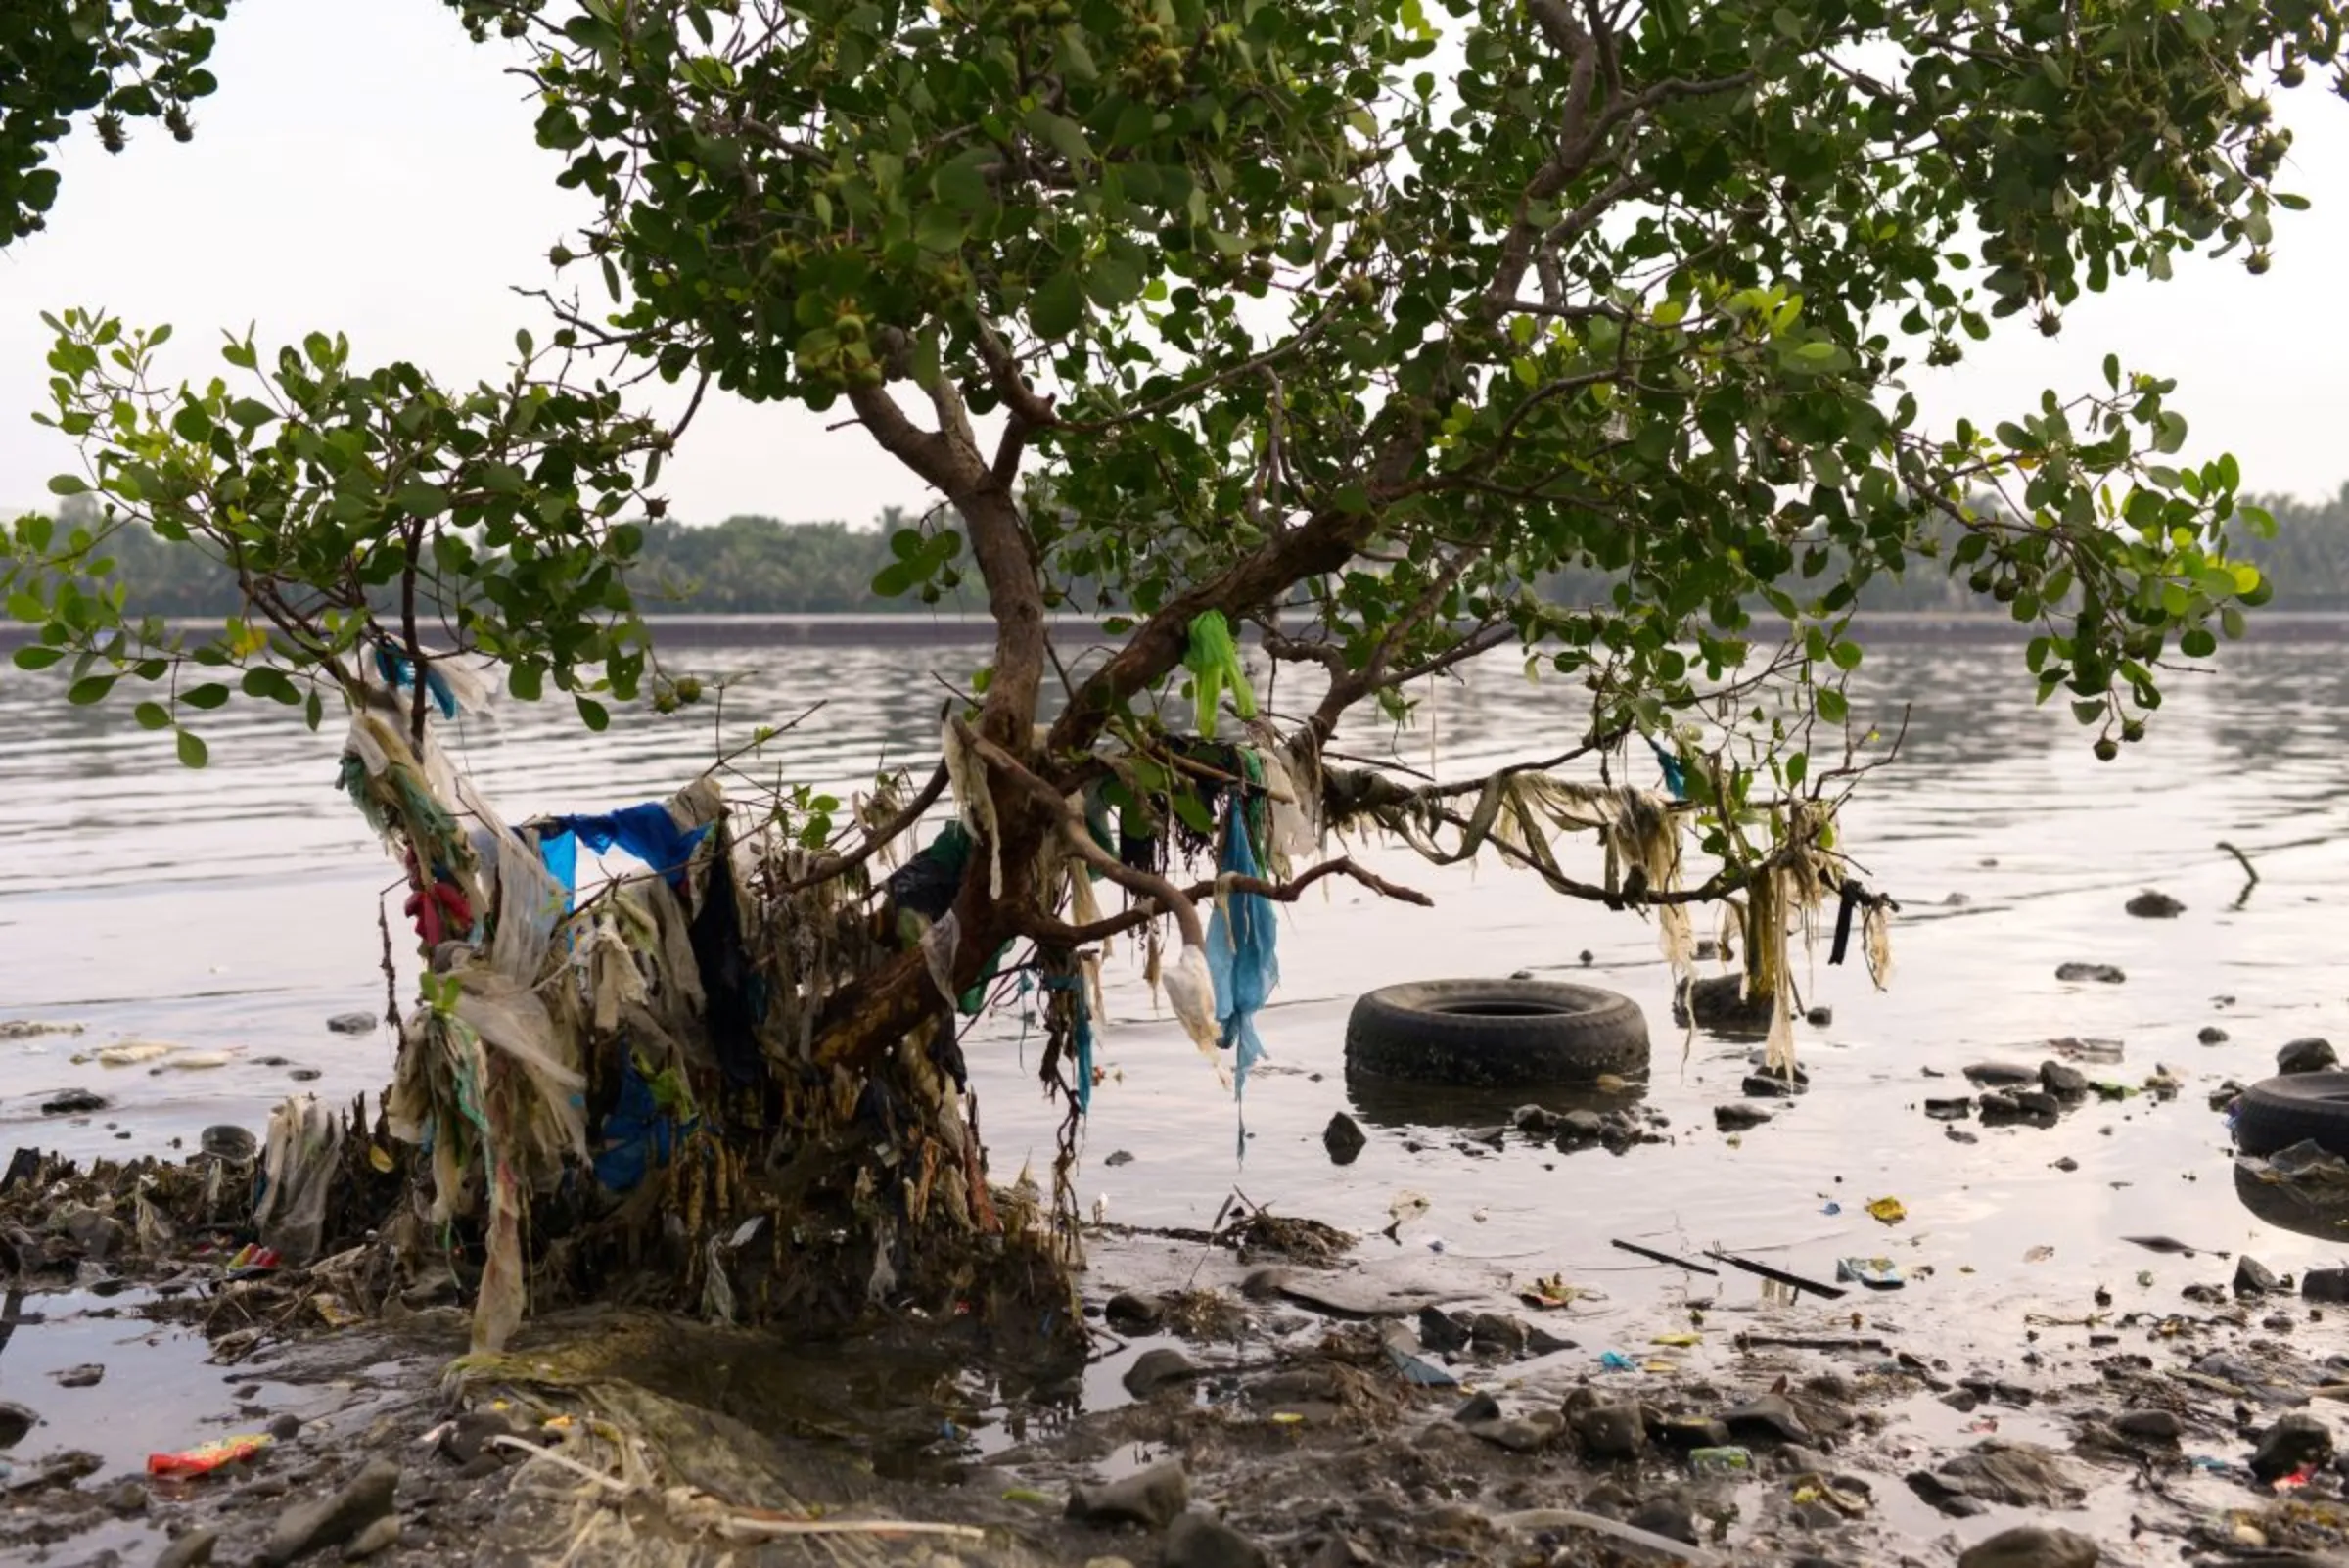 salt mines threaten mangrove restoration projects